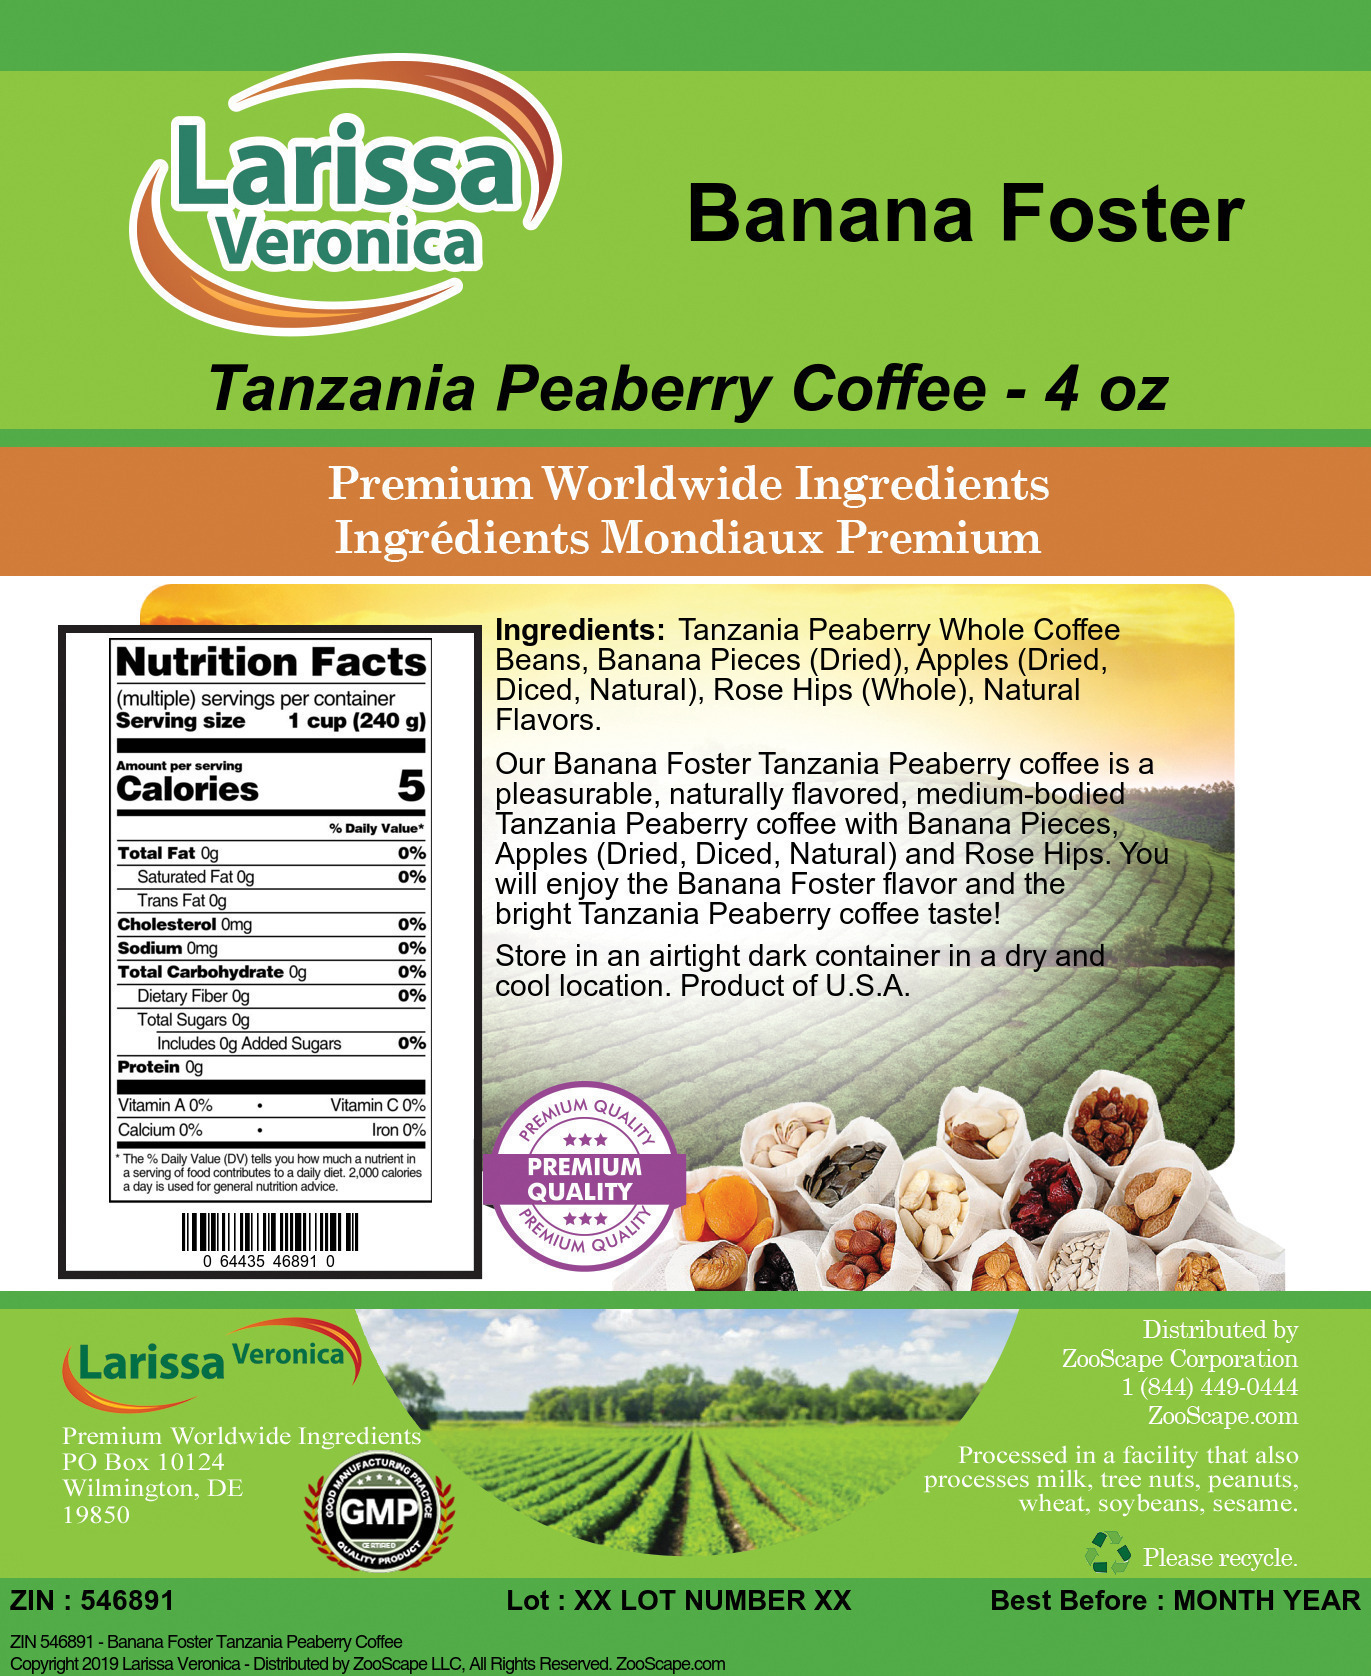 Banana Foster Tanzania Peaberry Coffee - Label